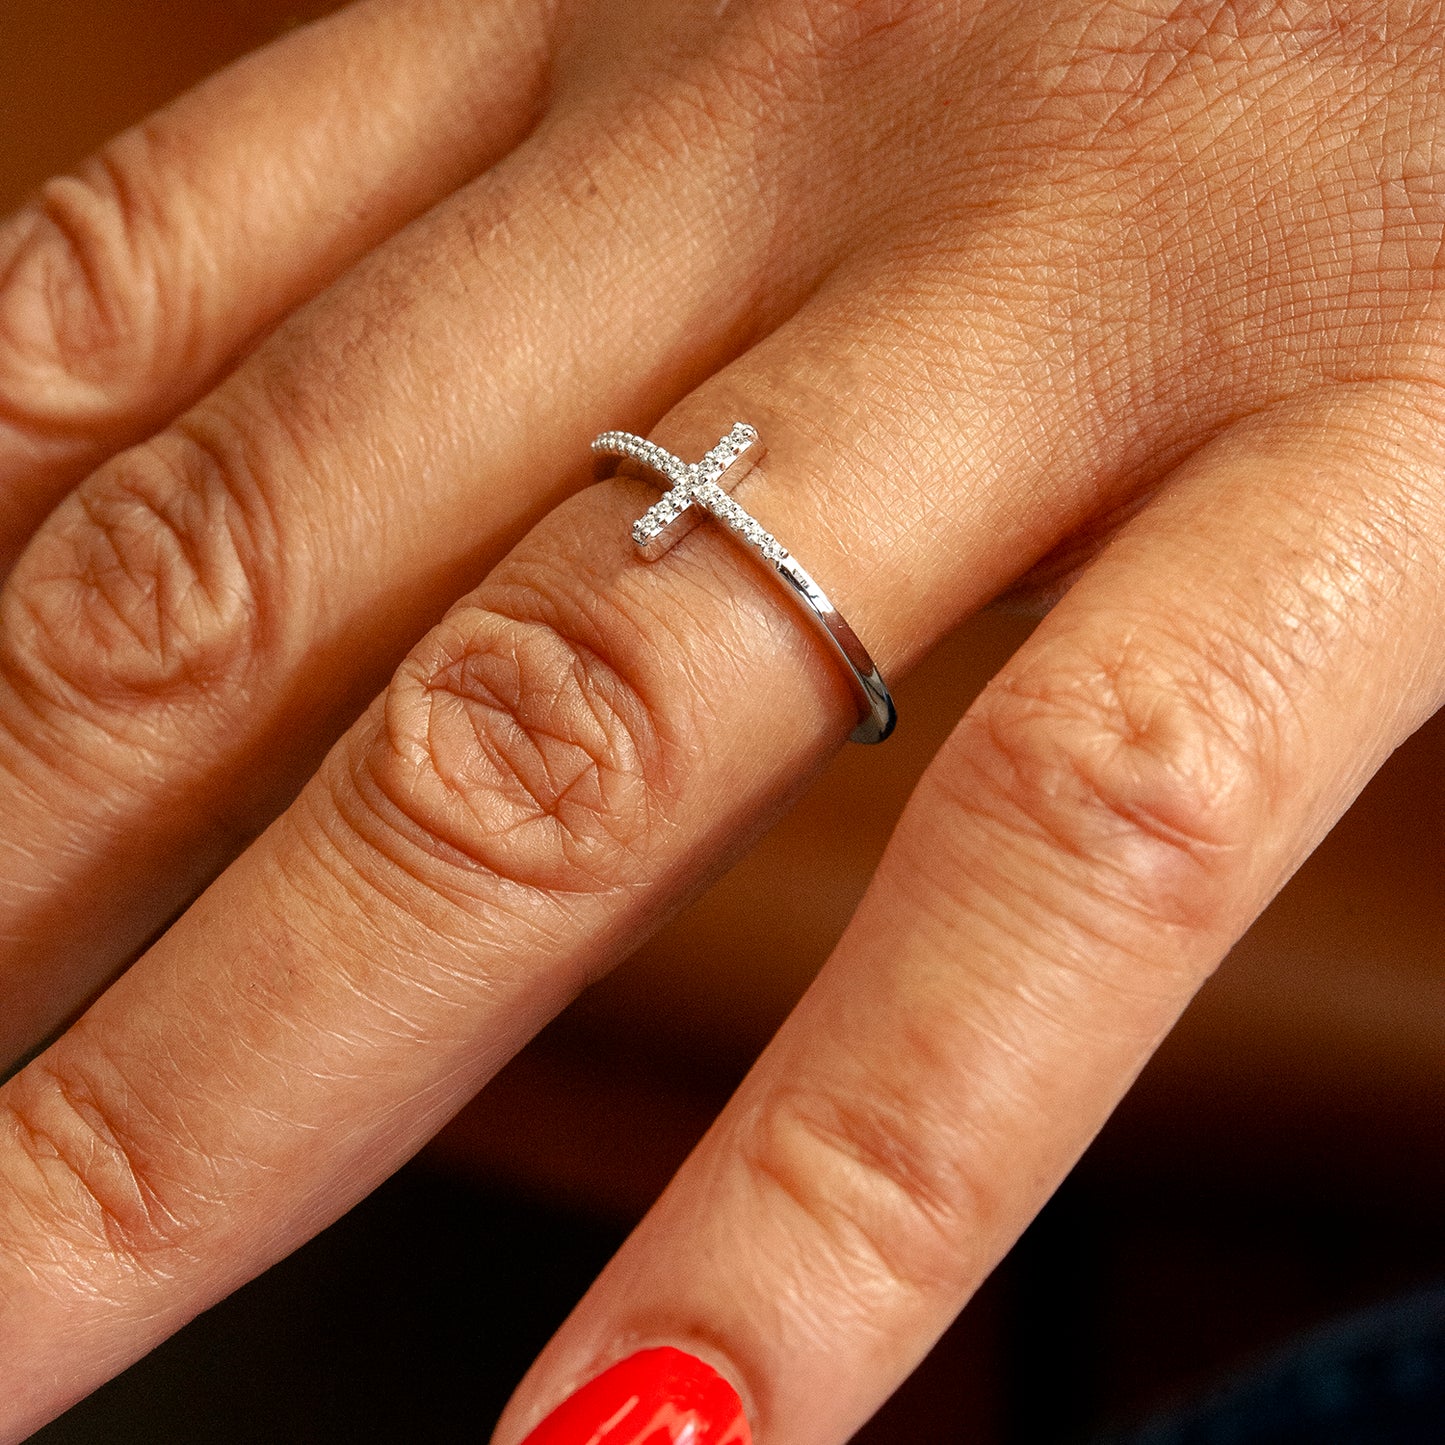 Chloe Sideways Cross Diamond Ring